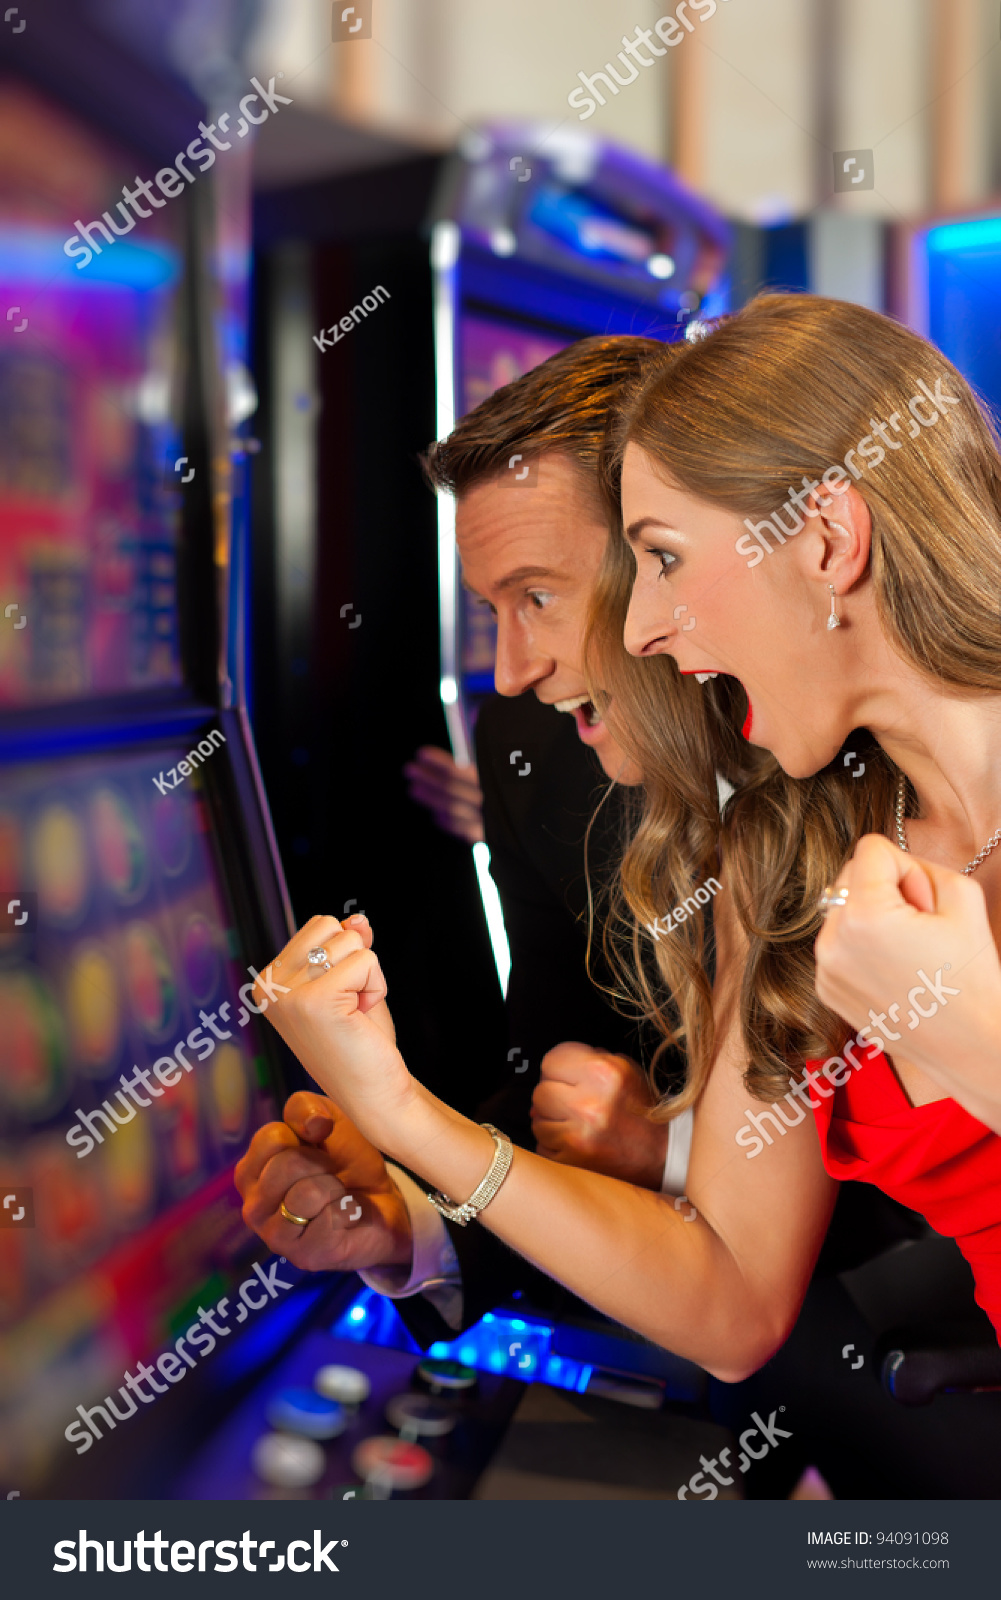 Couple in Casino on a slot machine winning and having fun #94091098